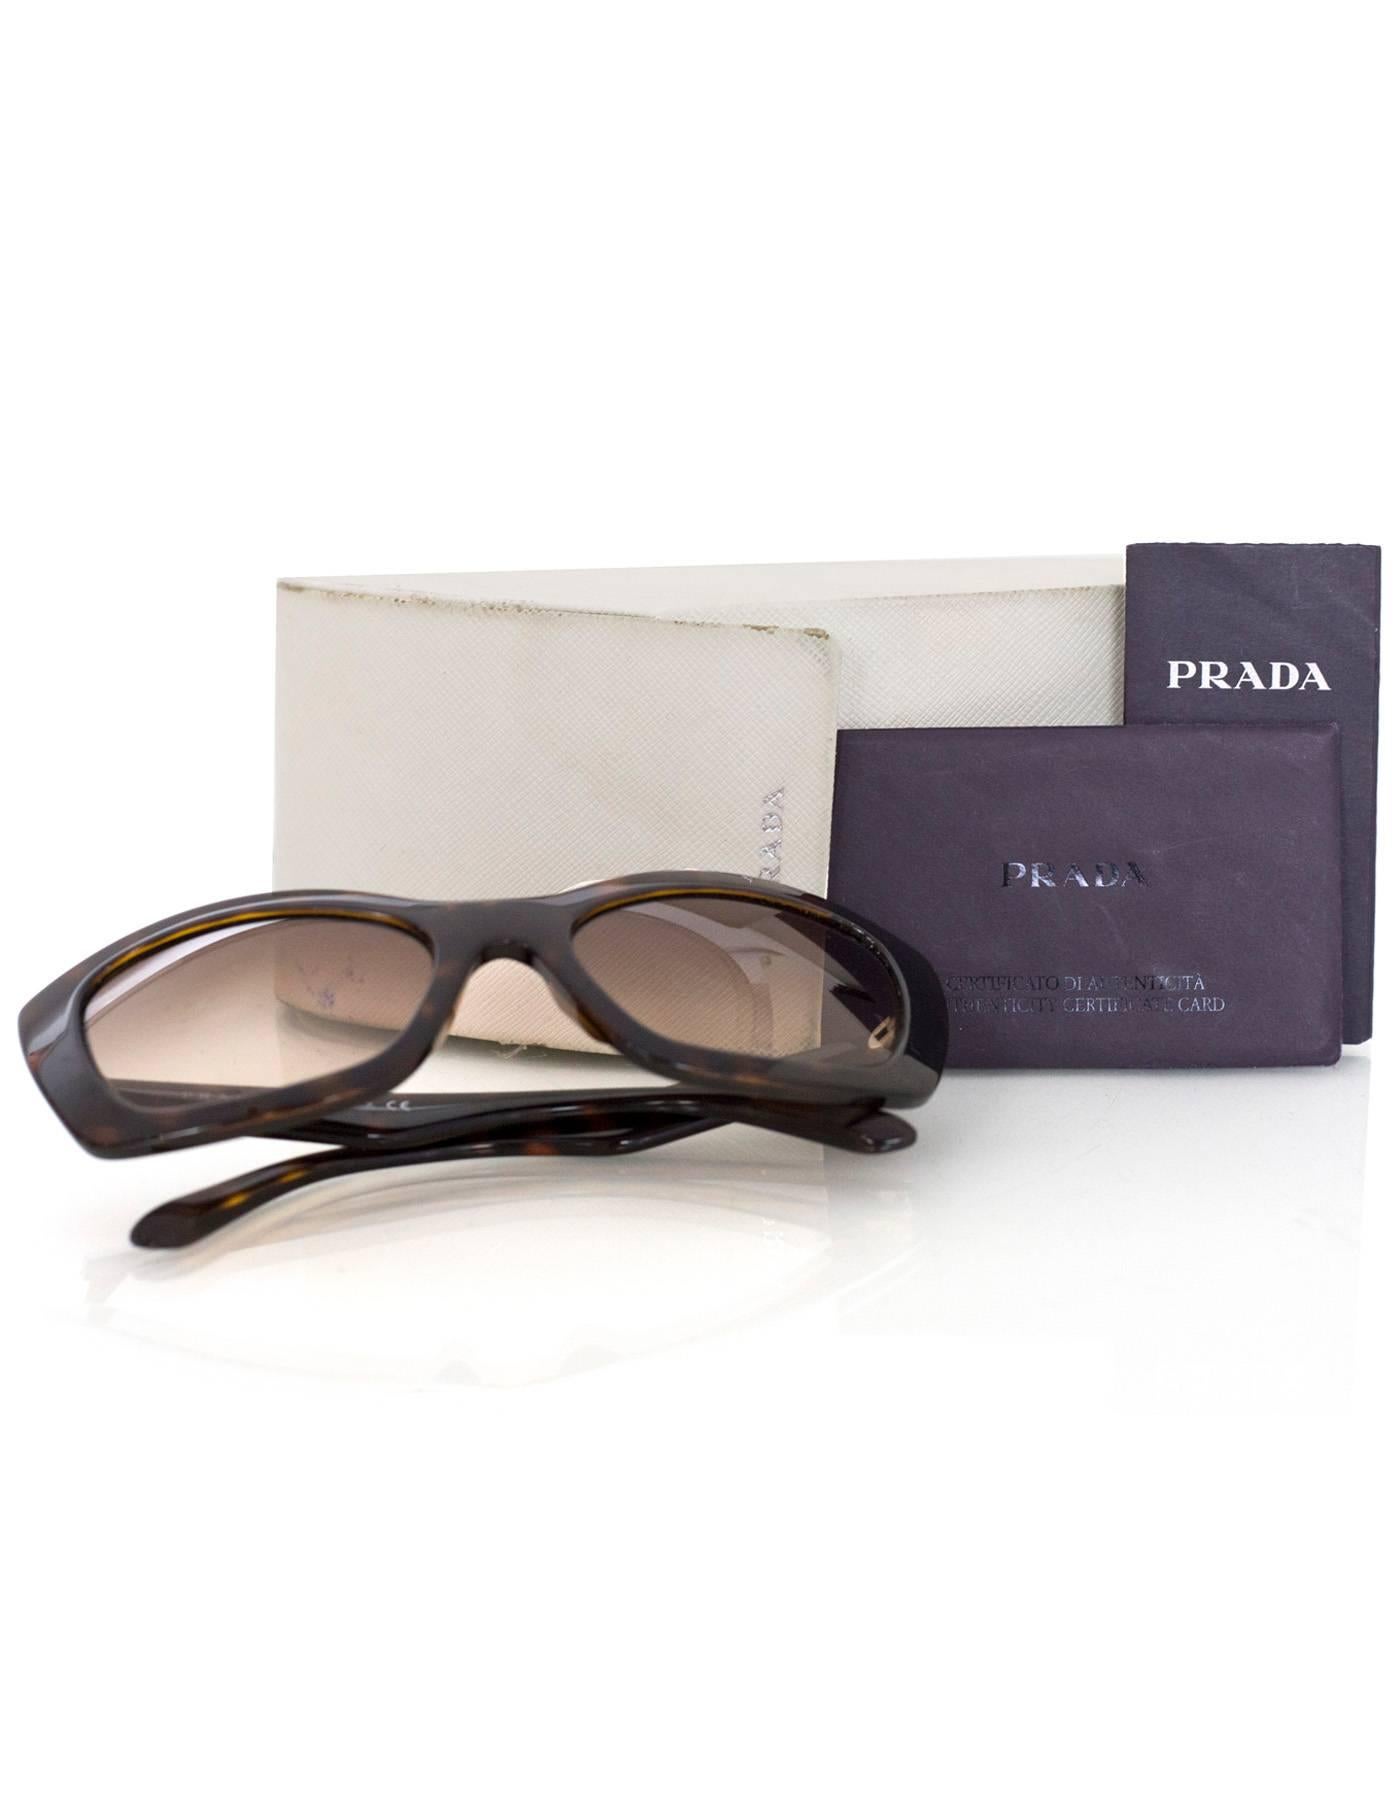 Prada Brown Tortoise Sunglasses with Case 3